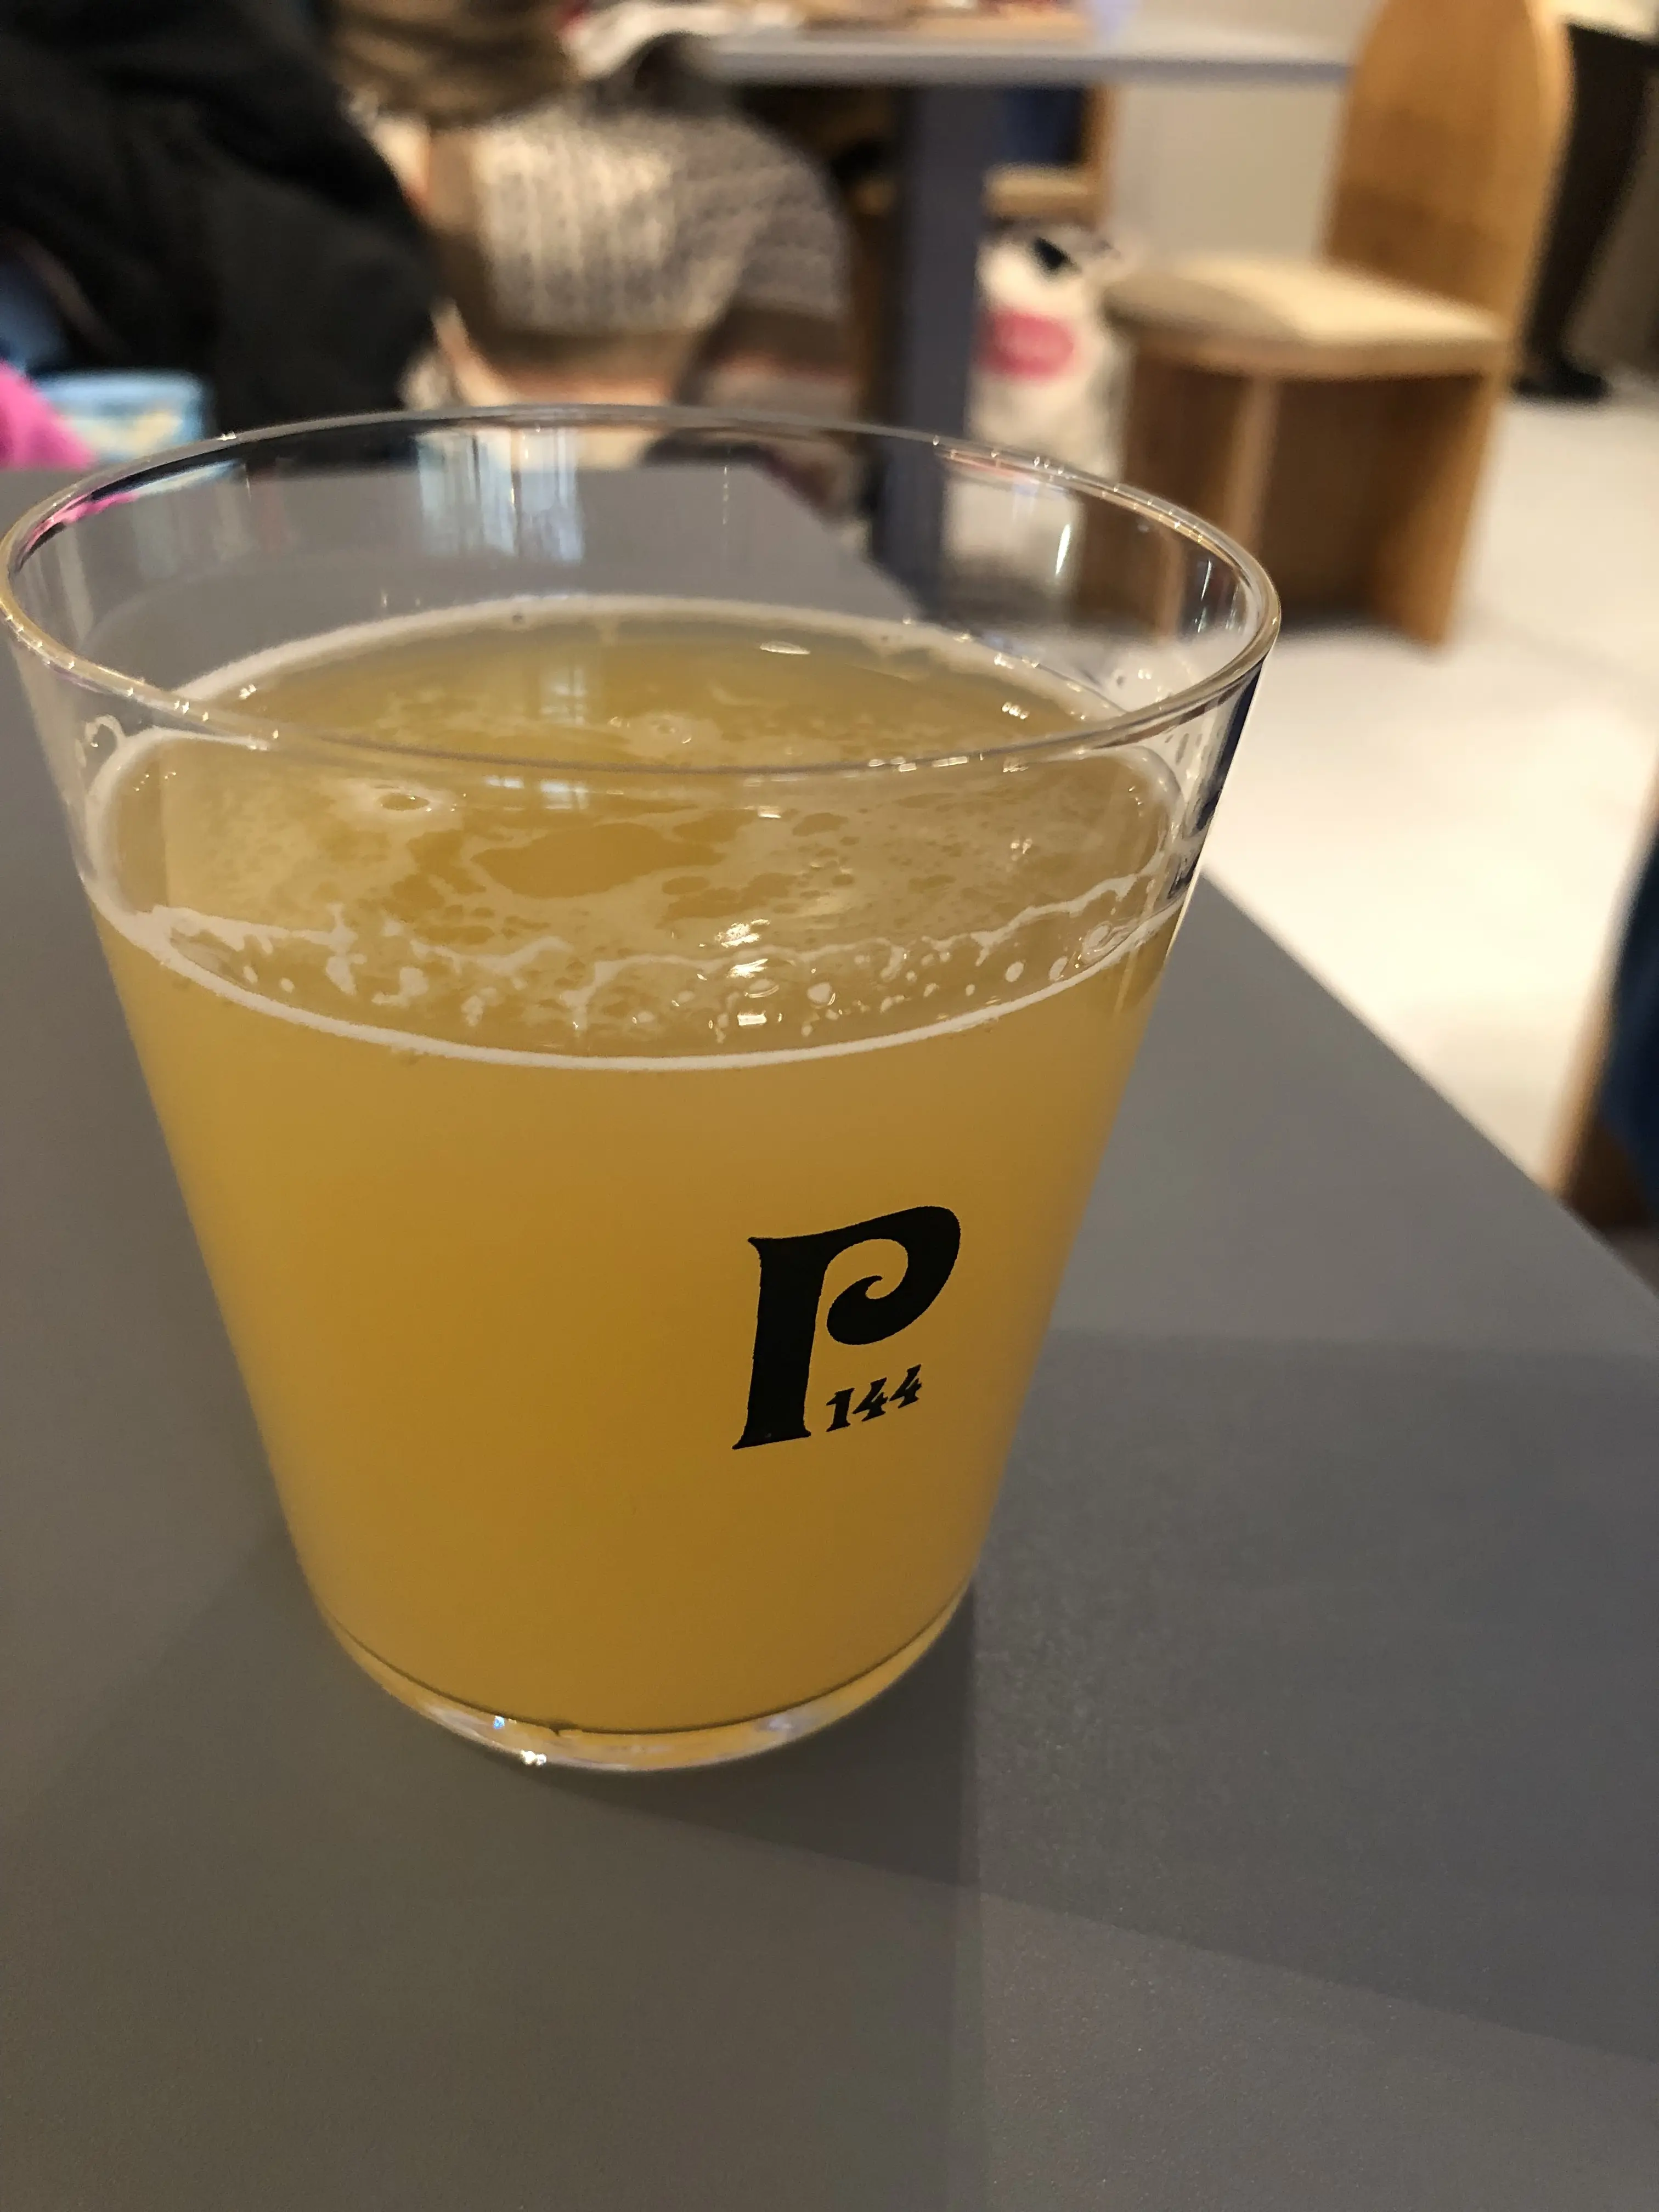 p-144「PUB」メニューのオリジナルクラフトビール